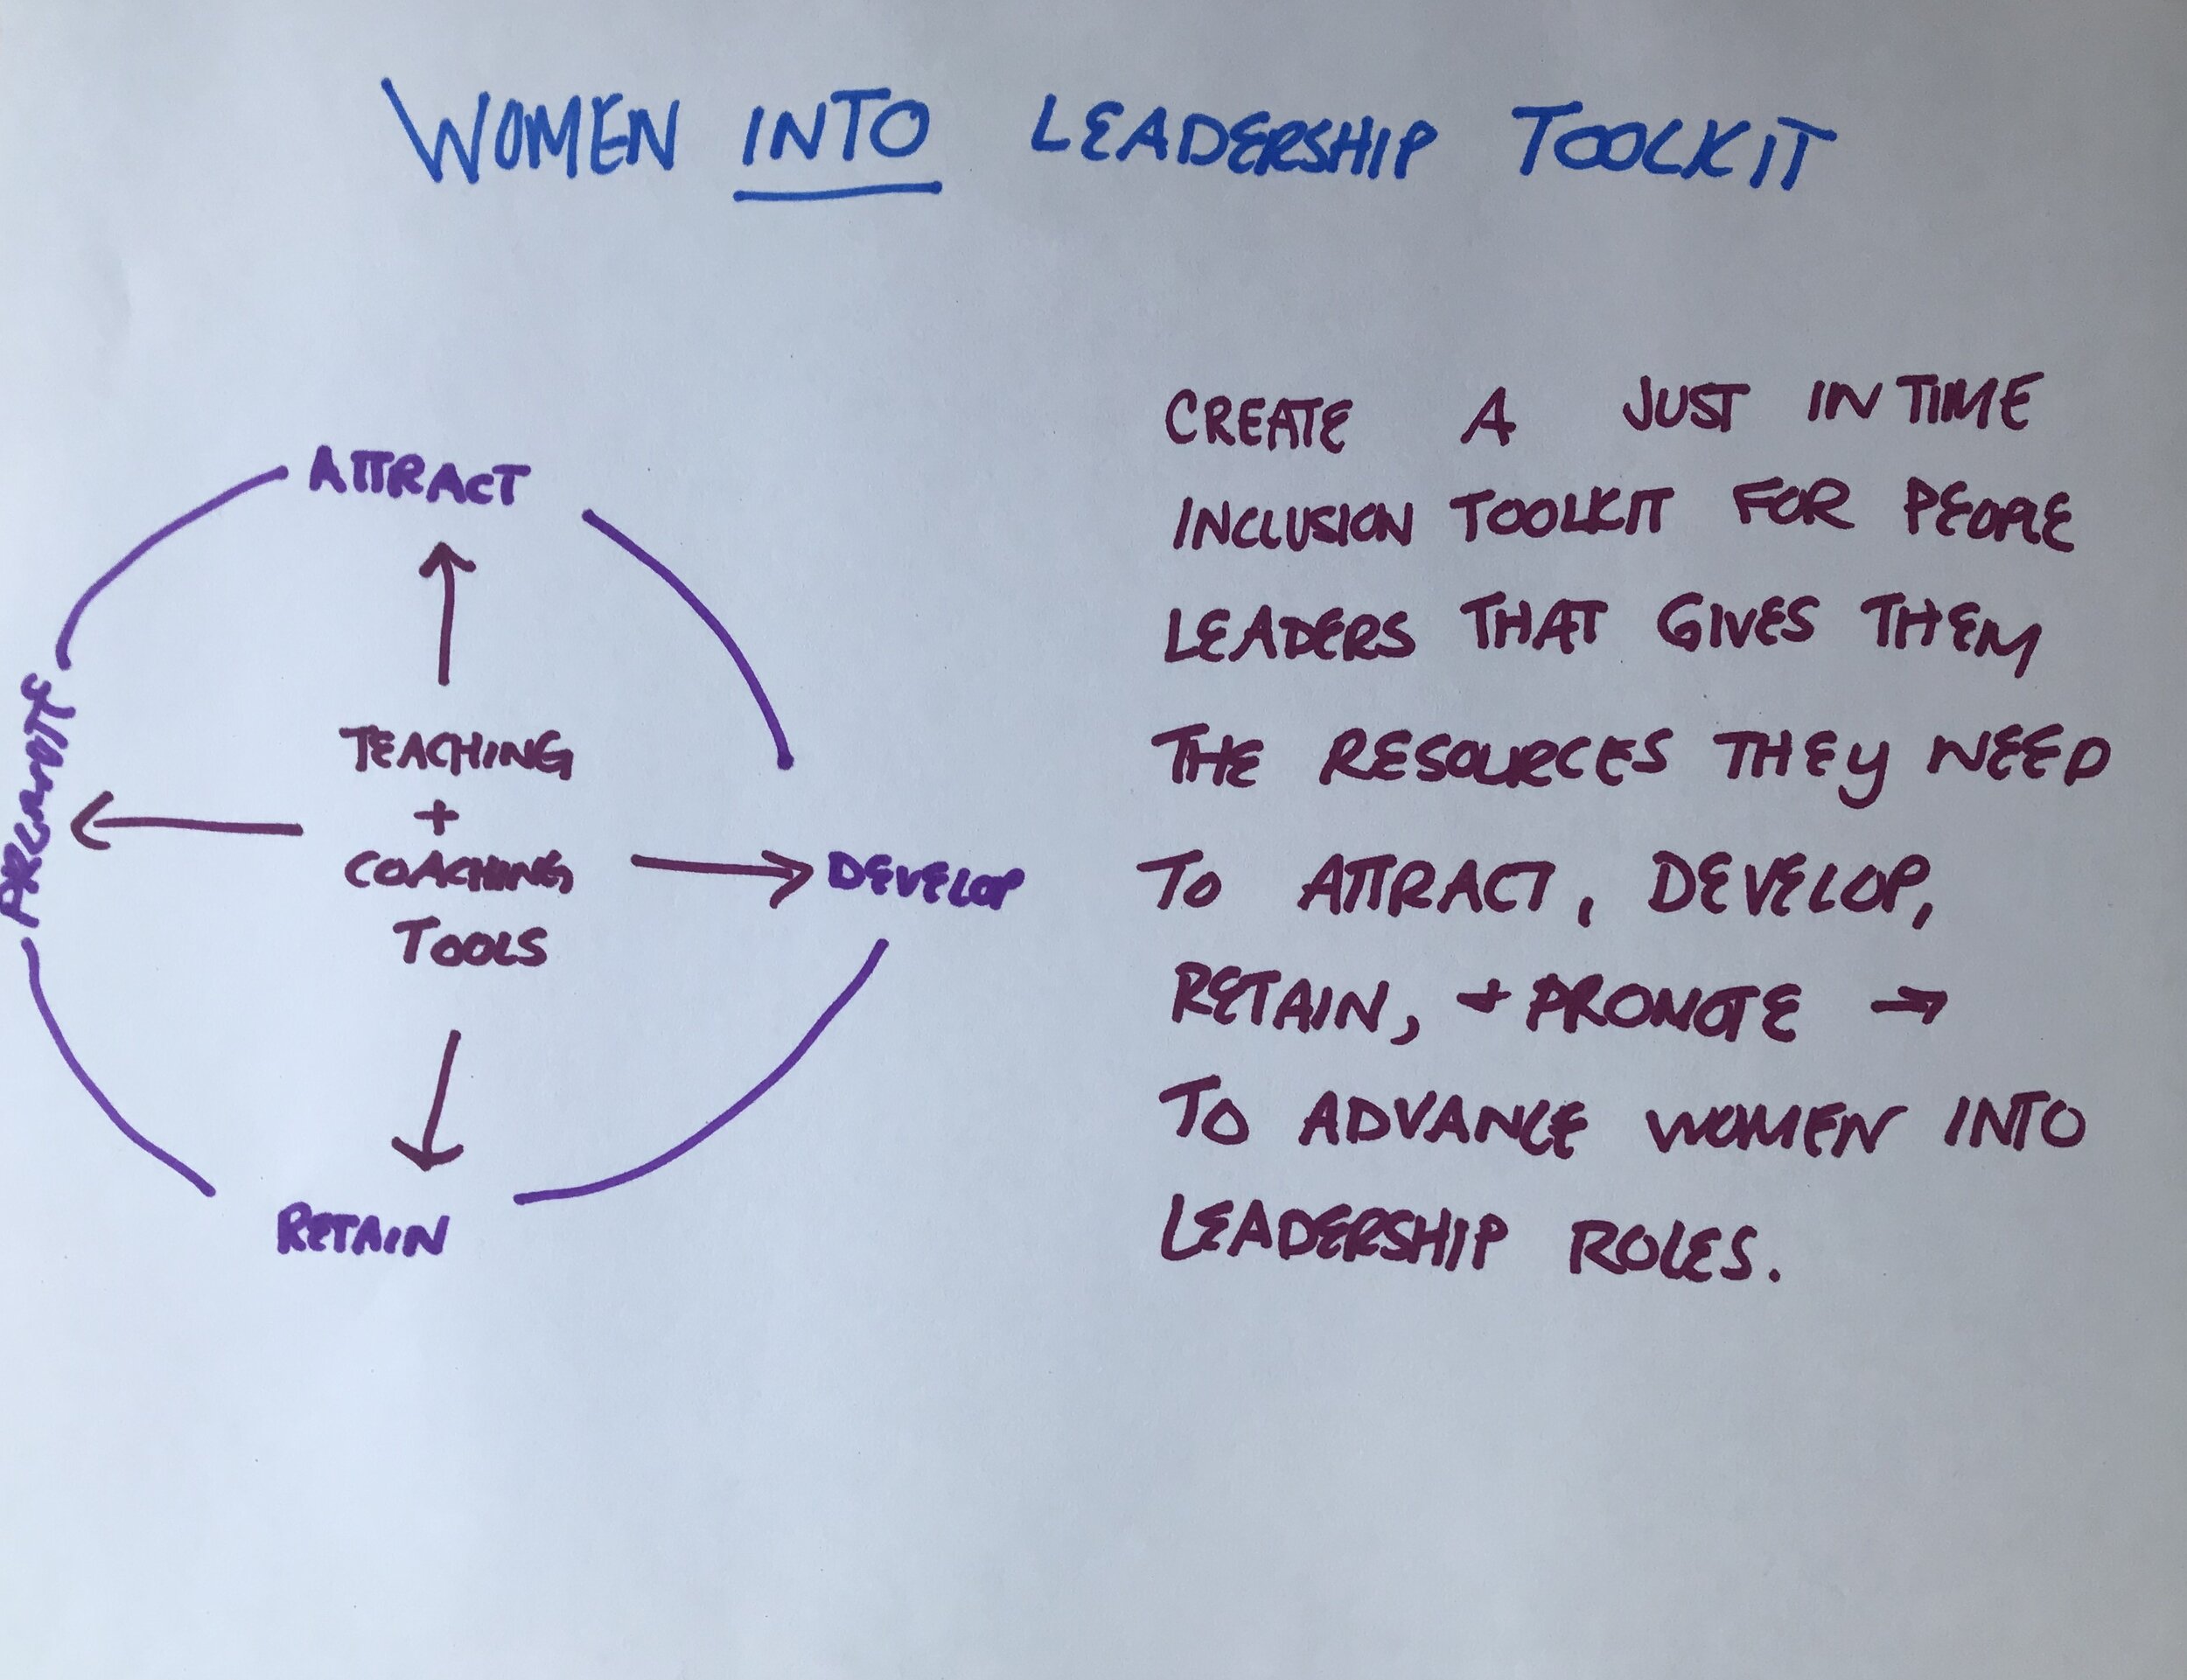 WOMEN INTO LEADERSHIP TOOLKIT